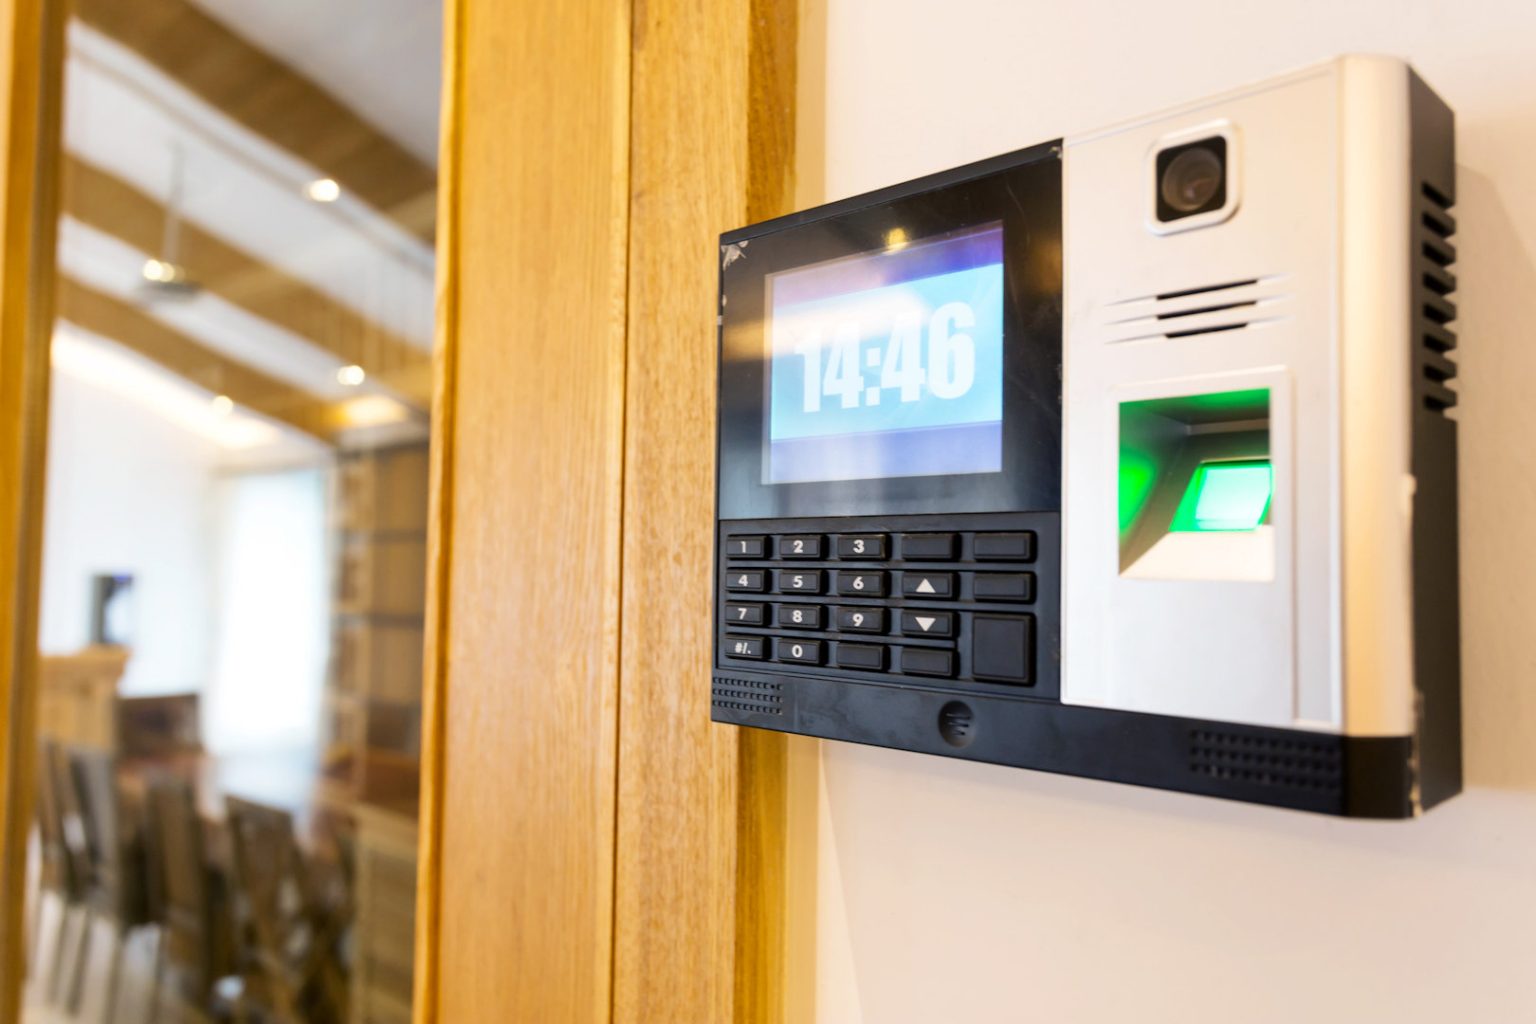 biometric fingerprint reader mounted on office wall